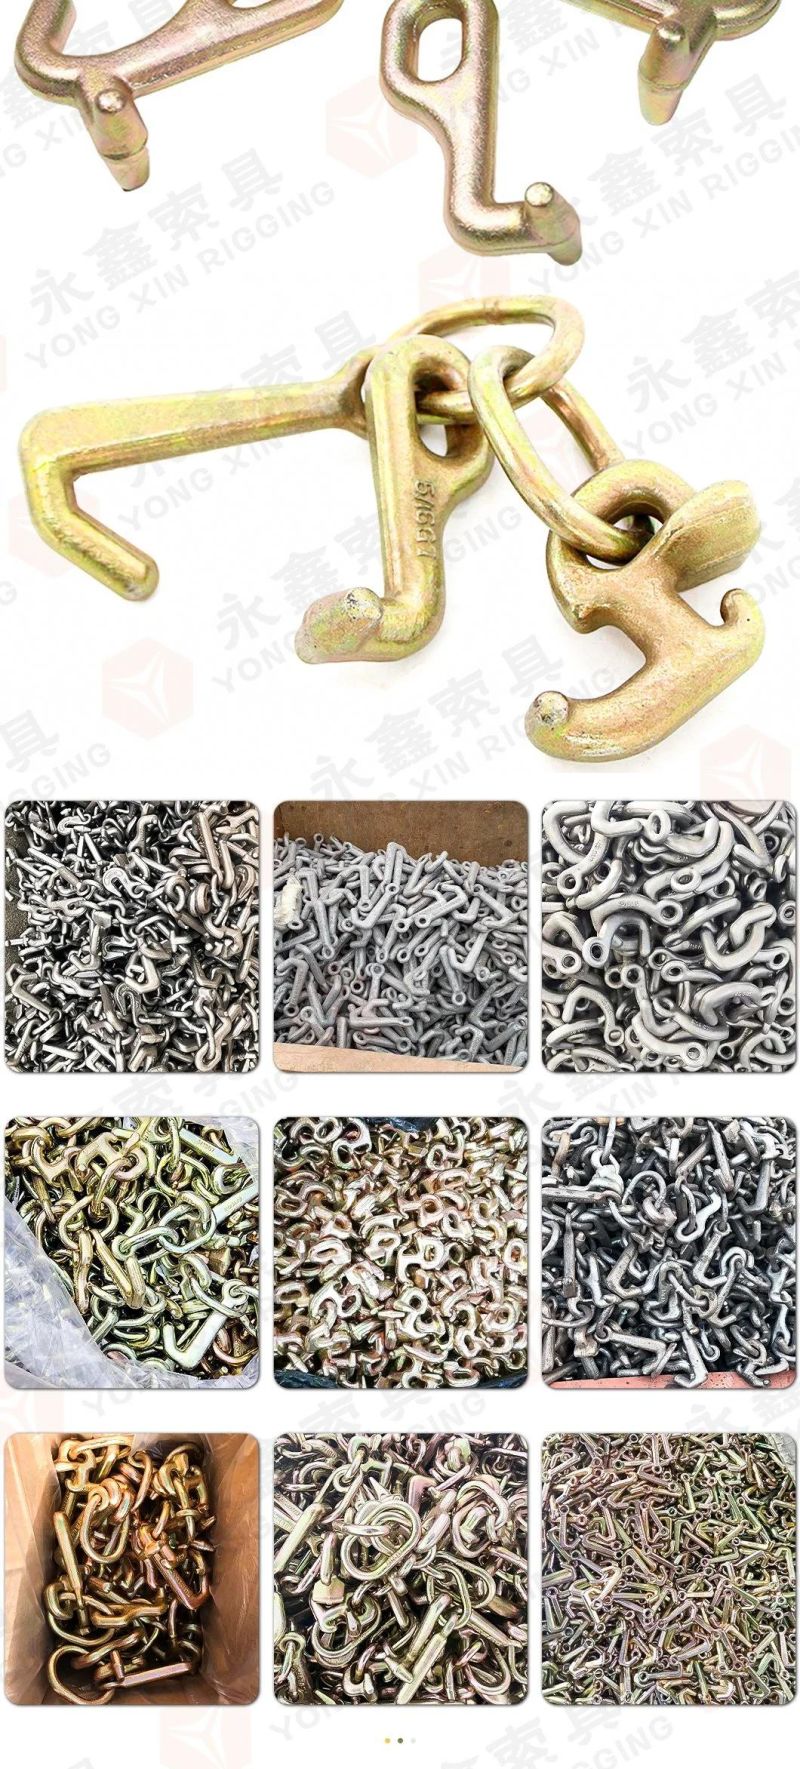 G70 Zinc Plating Towing Chain Tj& Grab Hook Cluster